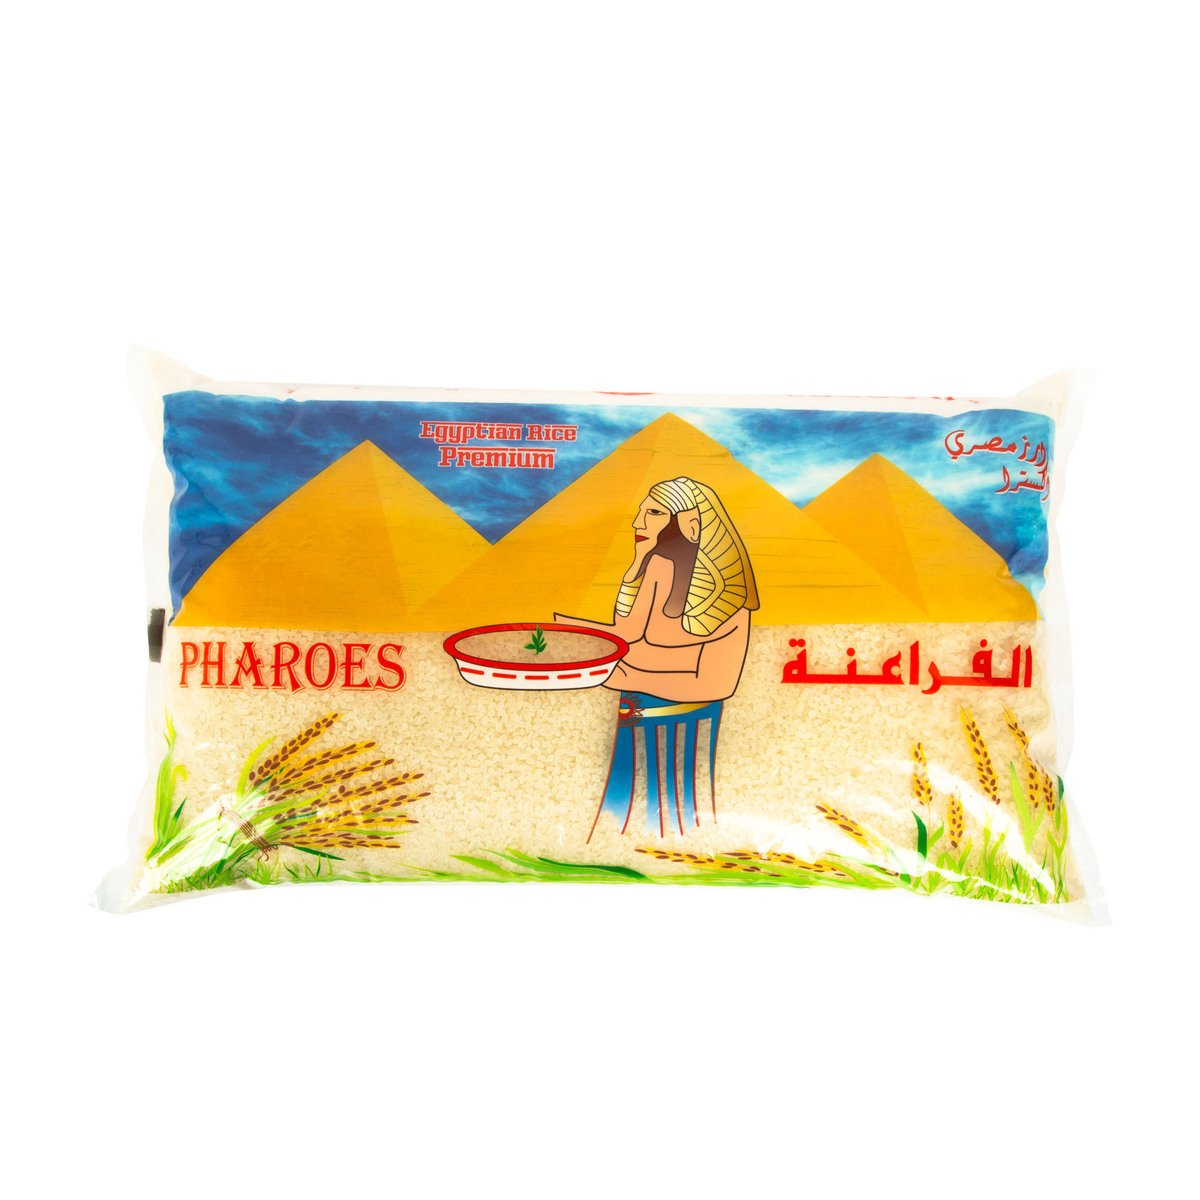 Pharoes Egyptian Premium Rice 10 kg